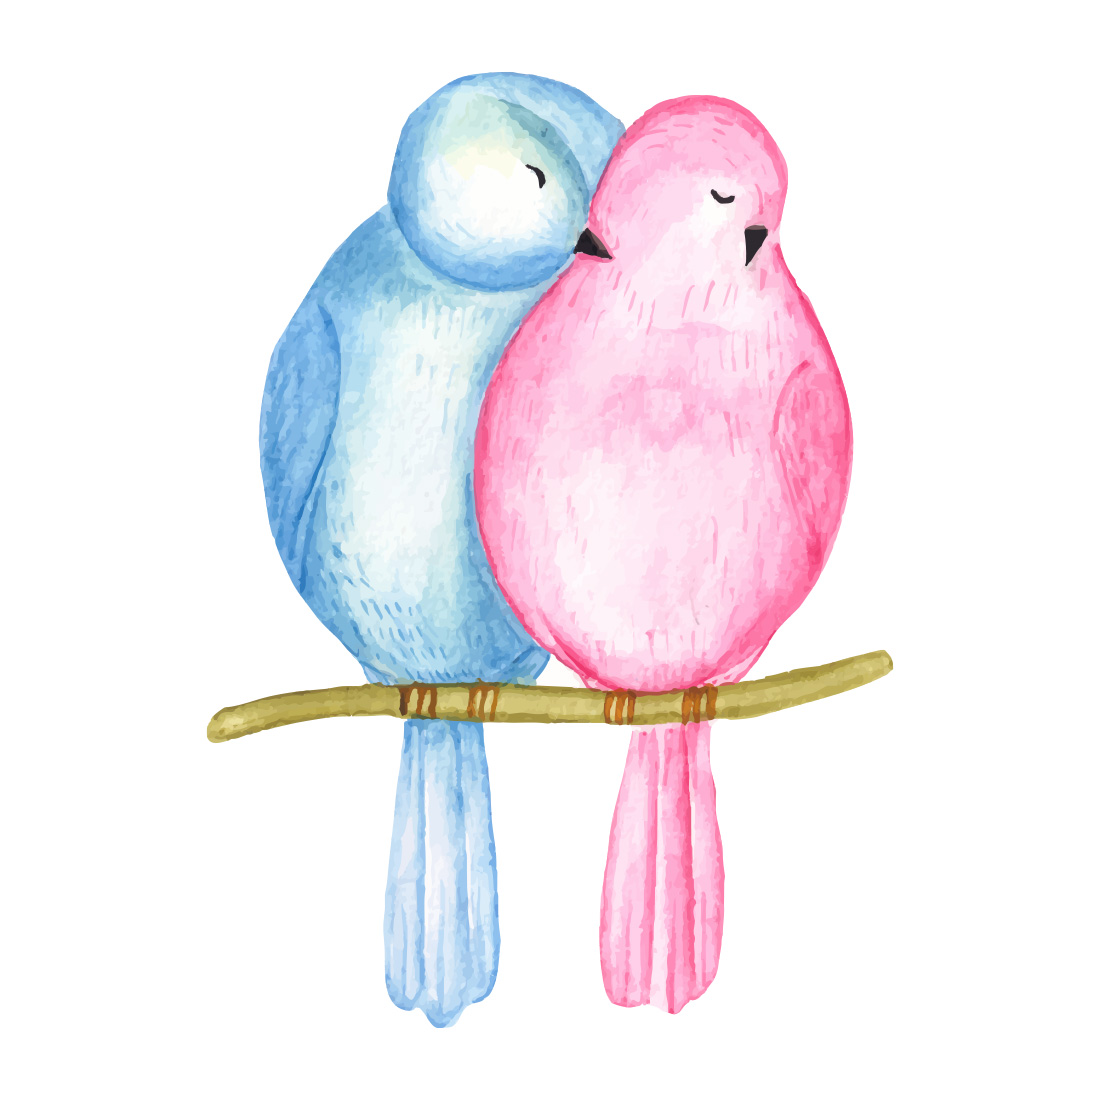 So nice lovely bird couple.